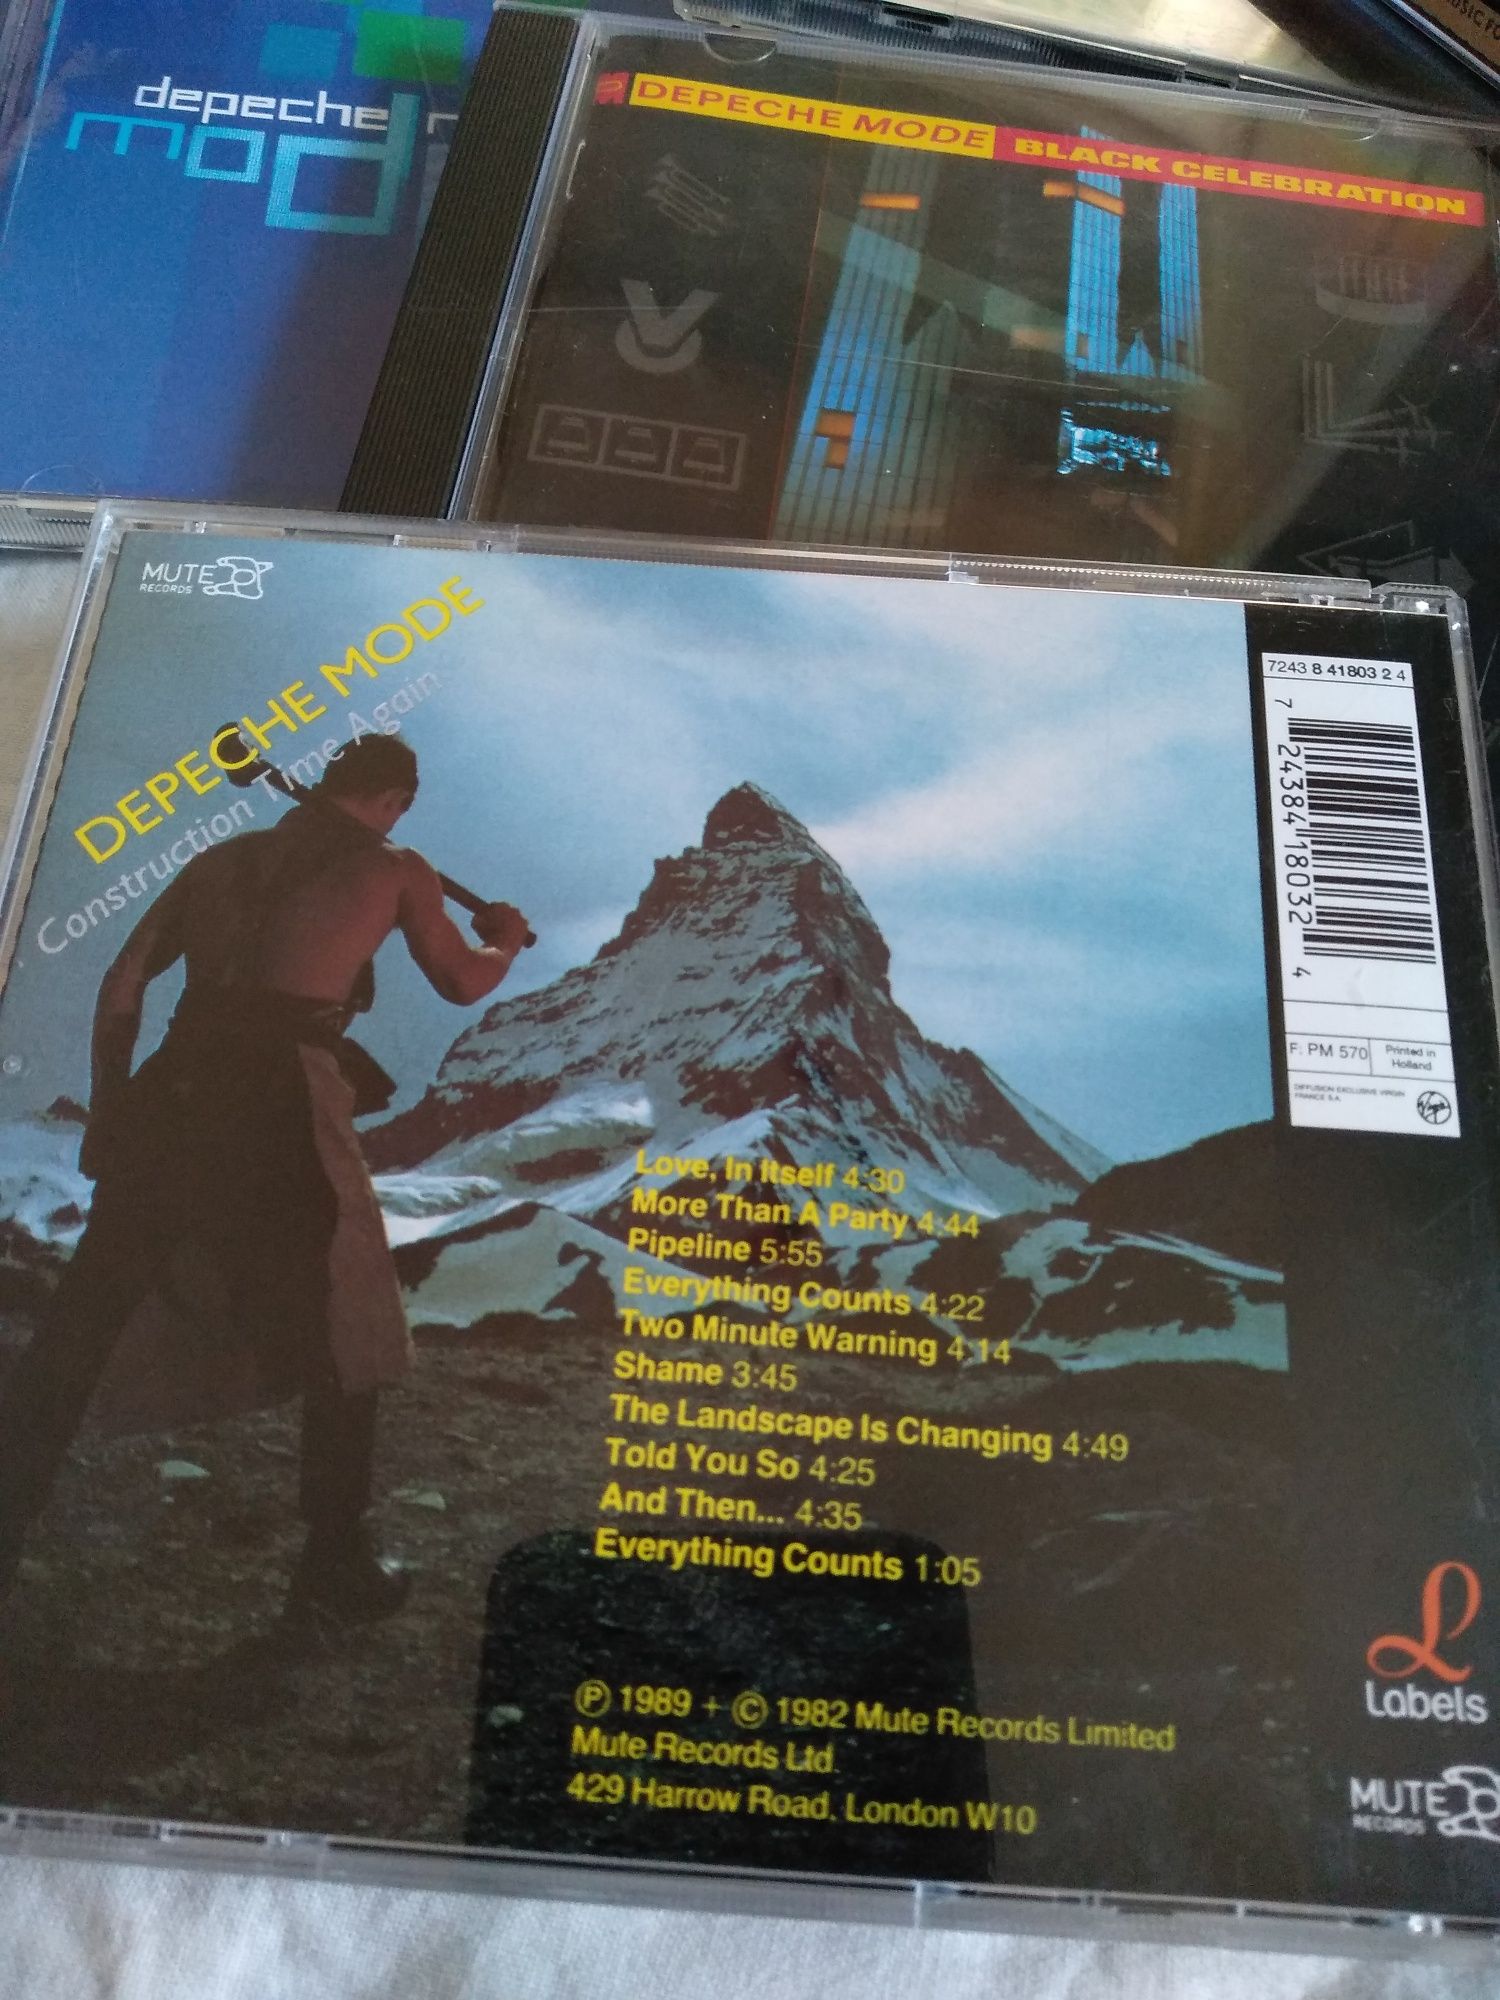 CD диски "Depeche mode" аудиоформат из Германии!